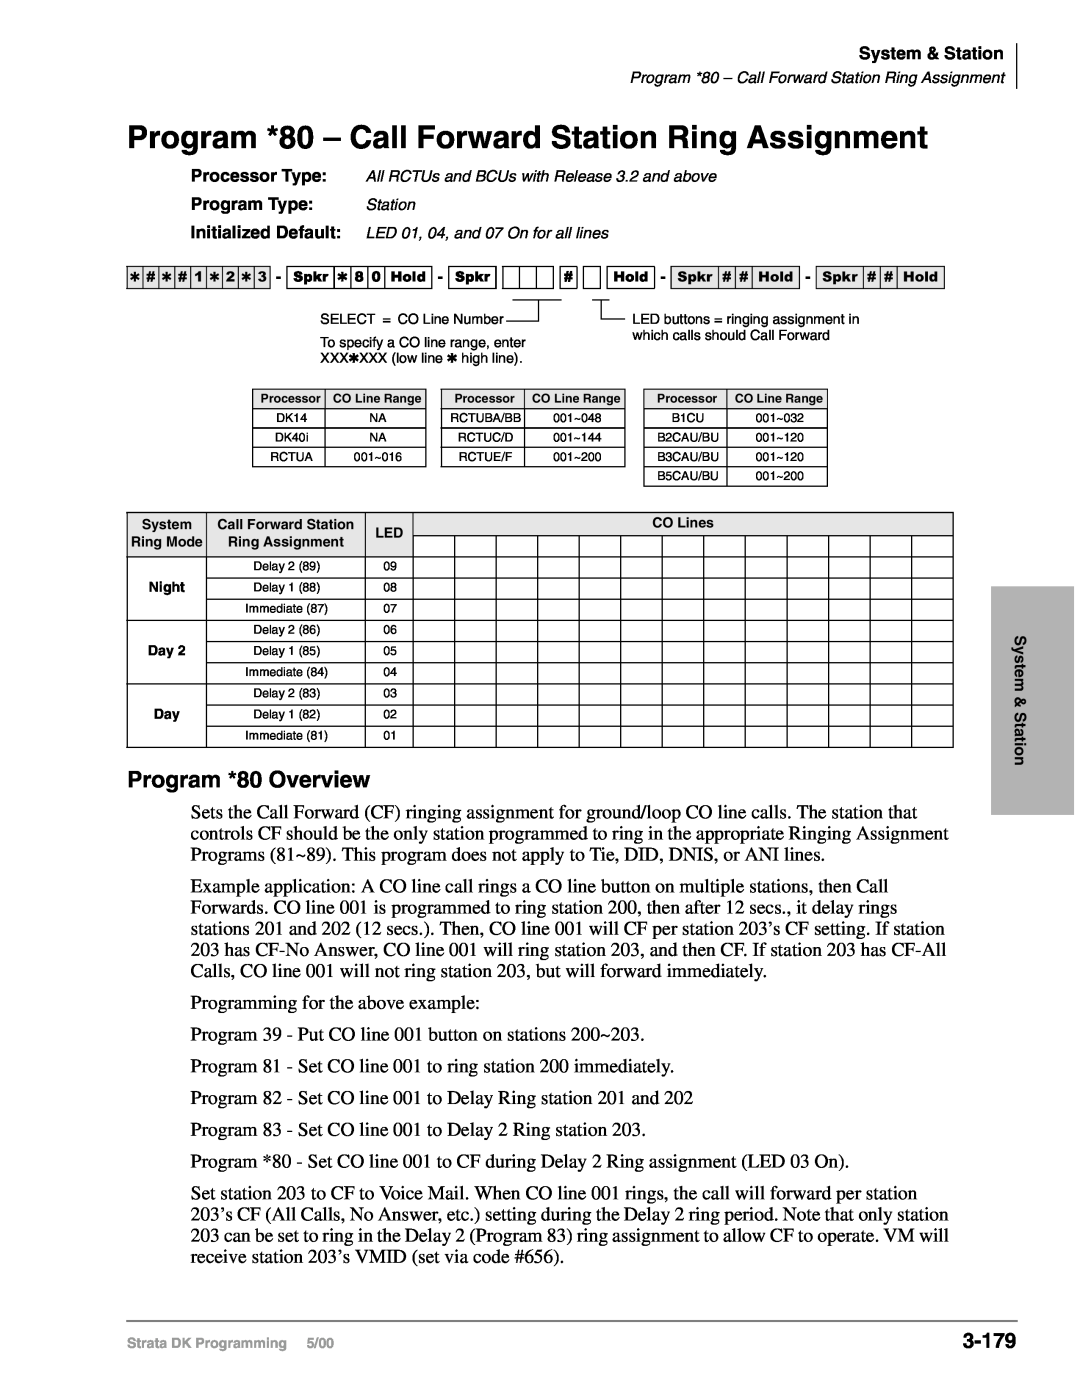 Toshiba DK424I, dk14, DK40I manual Program *80 Overview, 3-179 